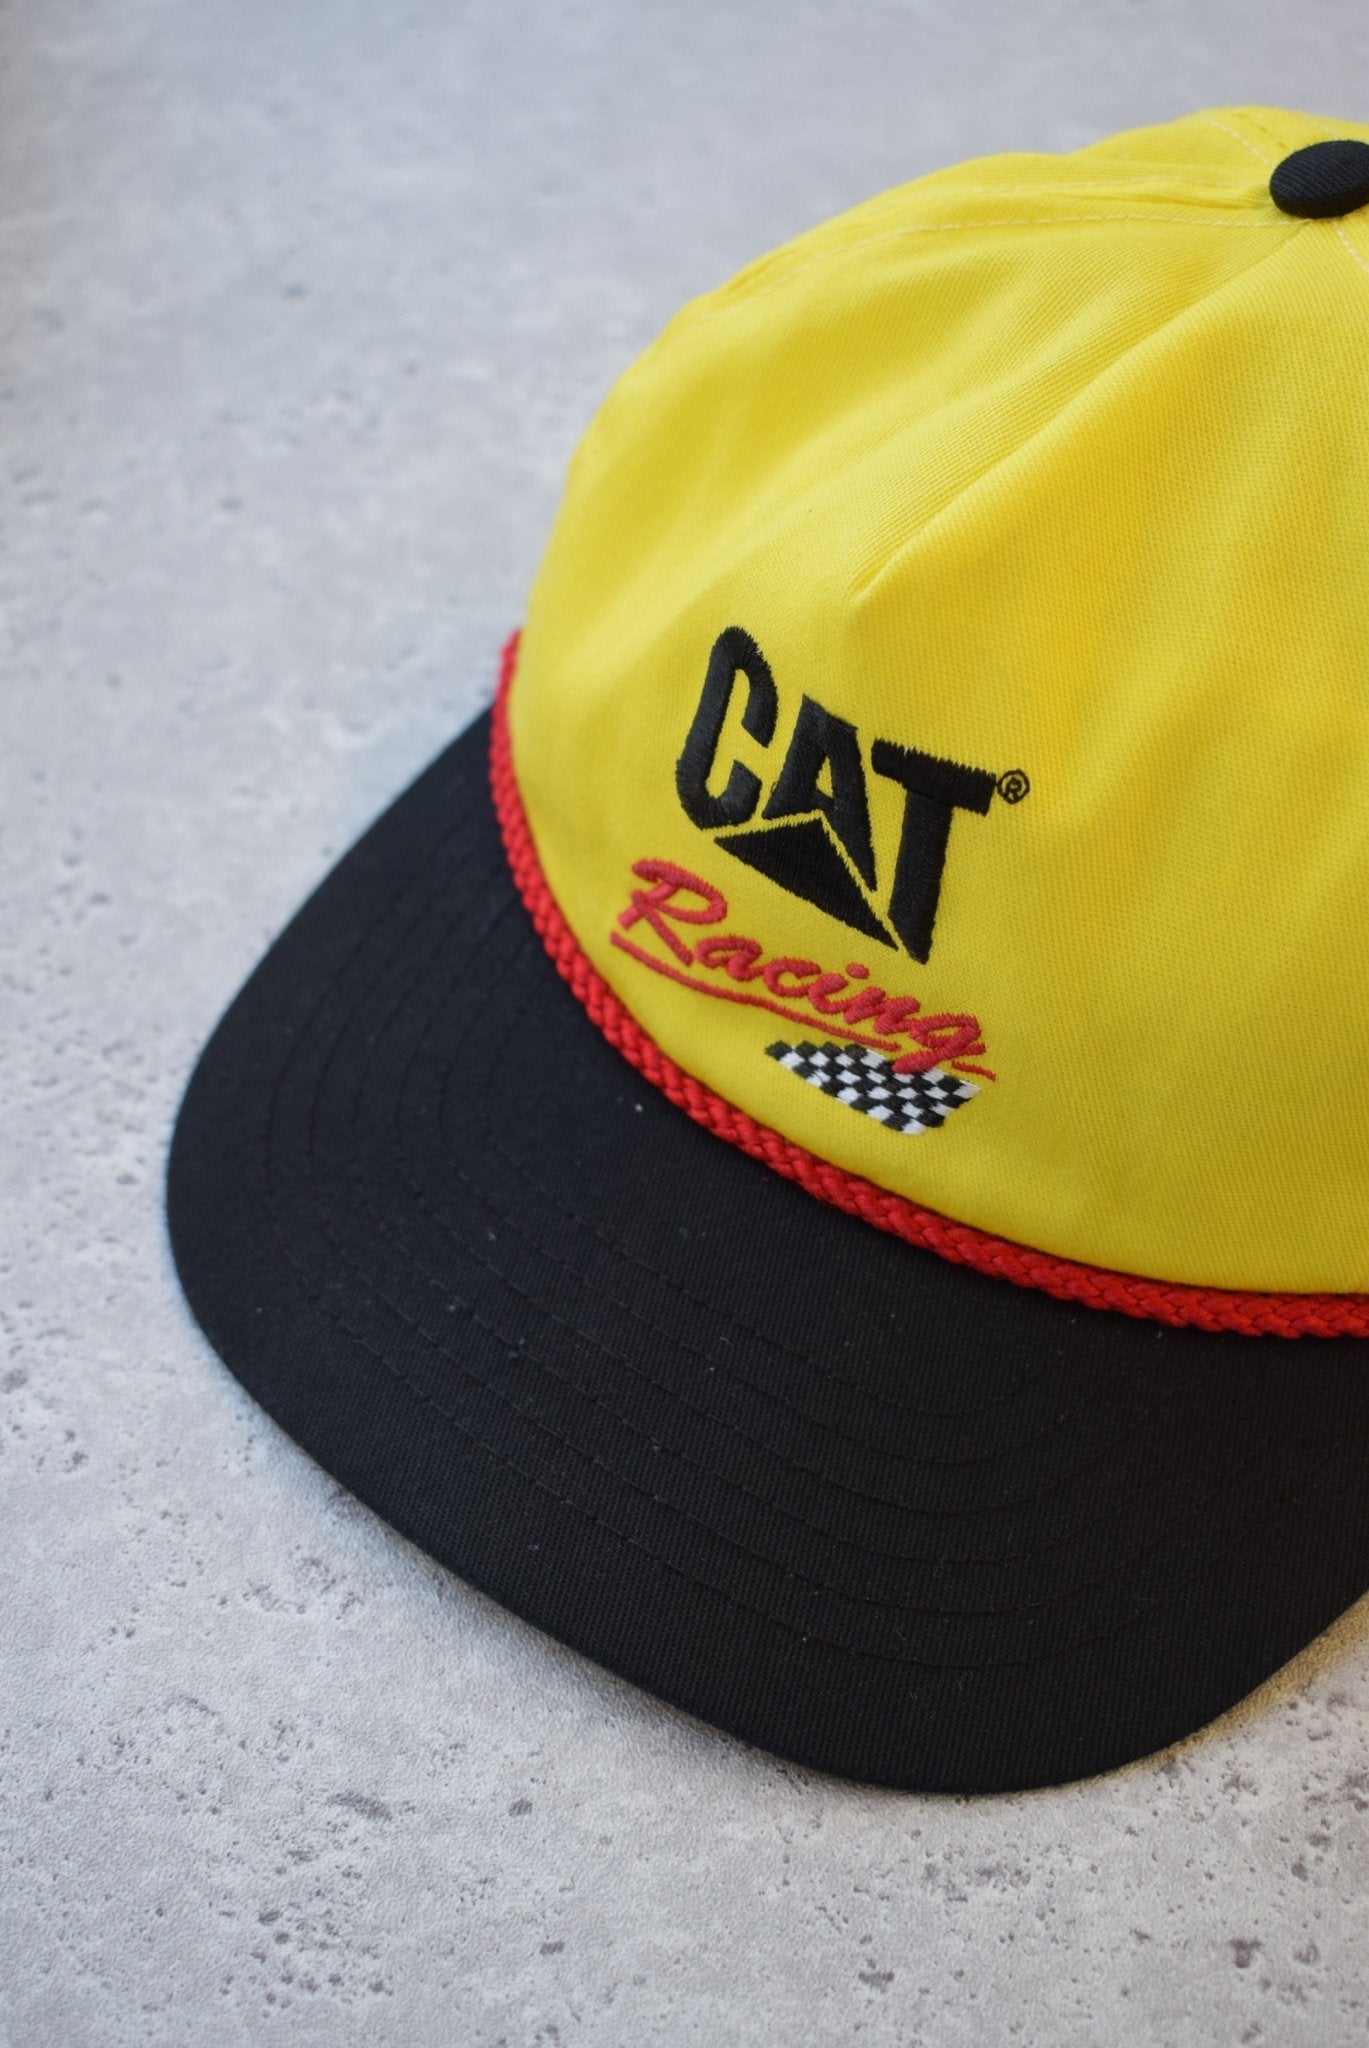 Vintage CAT Racing Hat - Retrospective Store